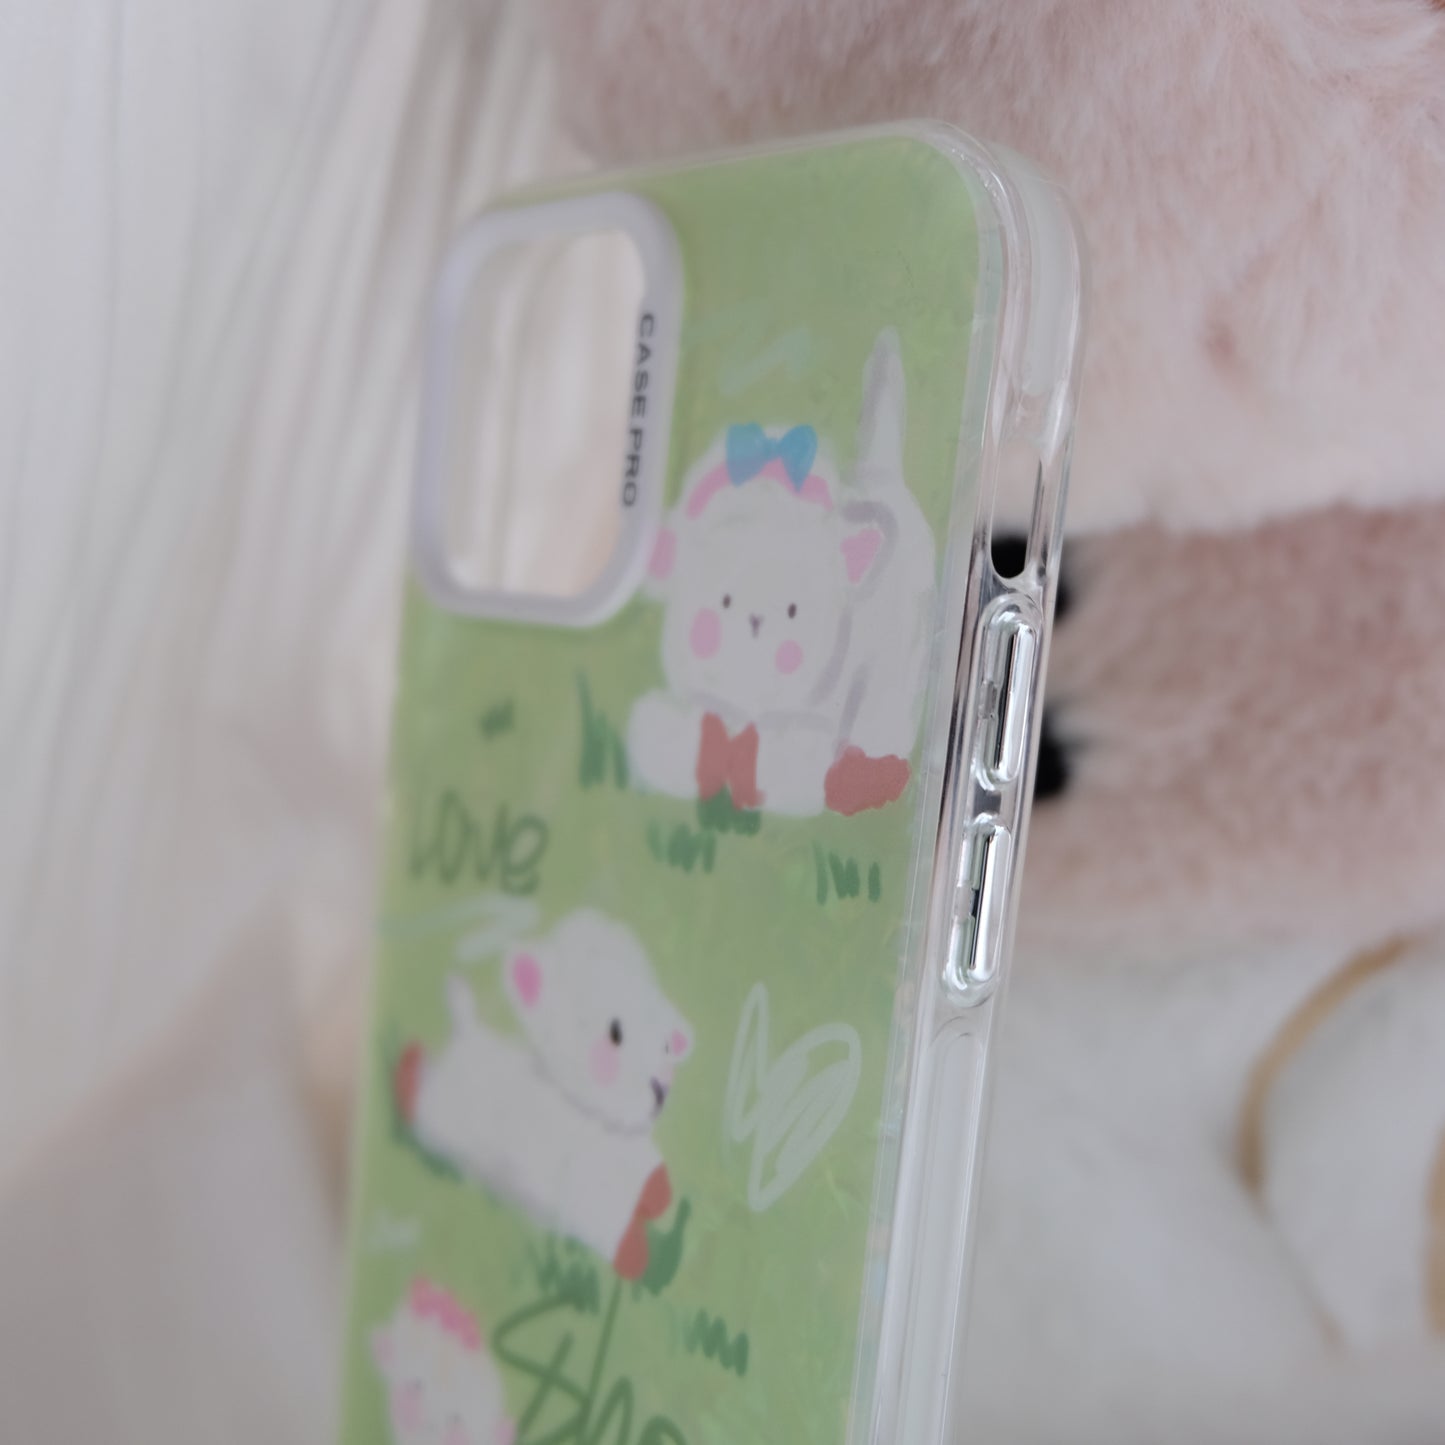 Love sheep phone case